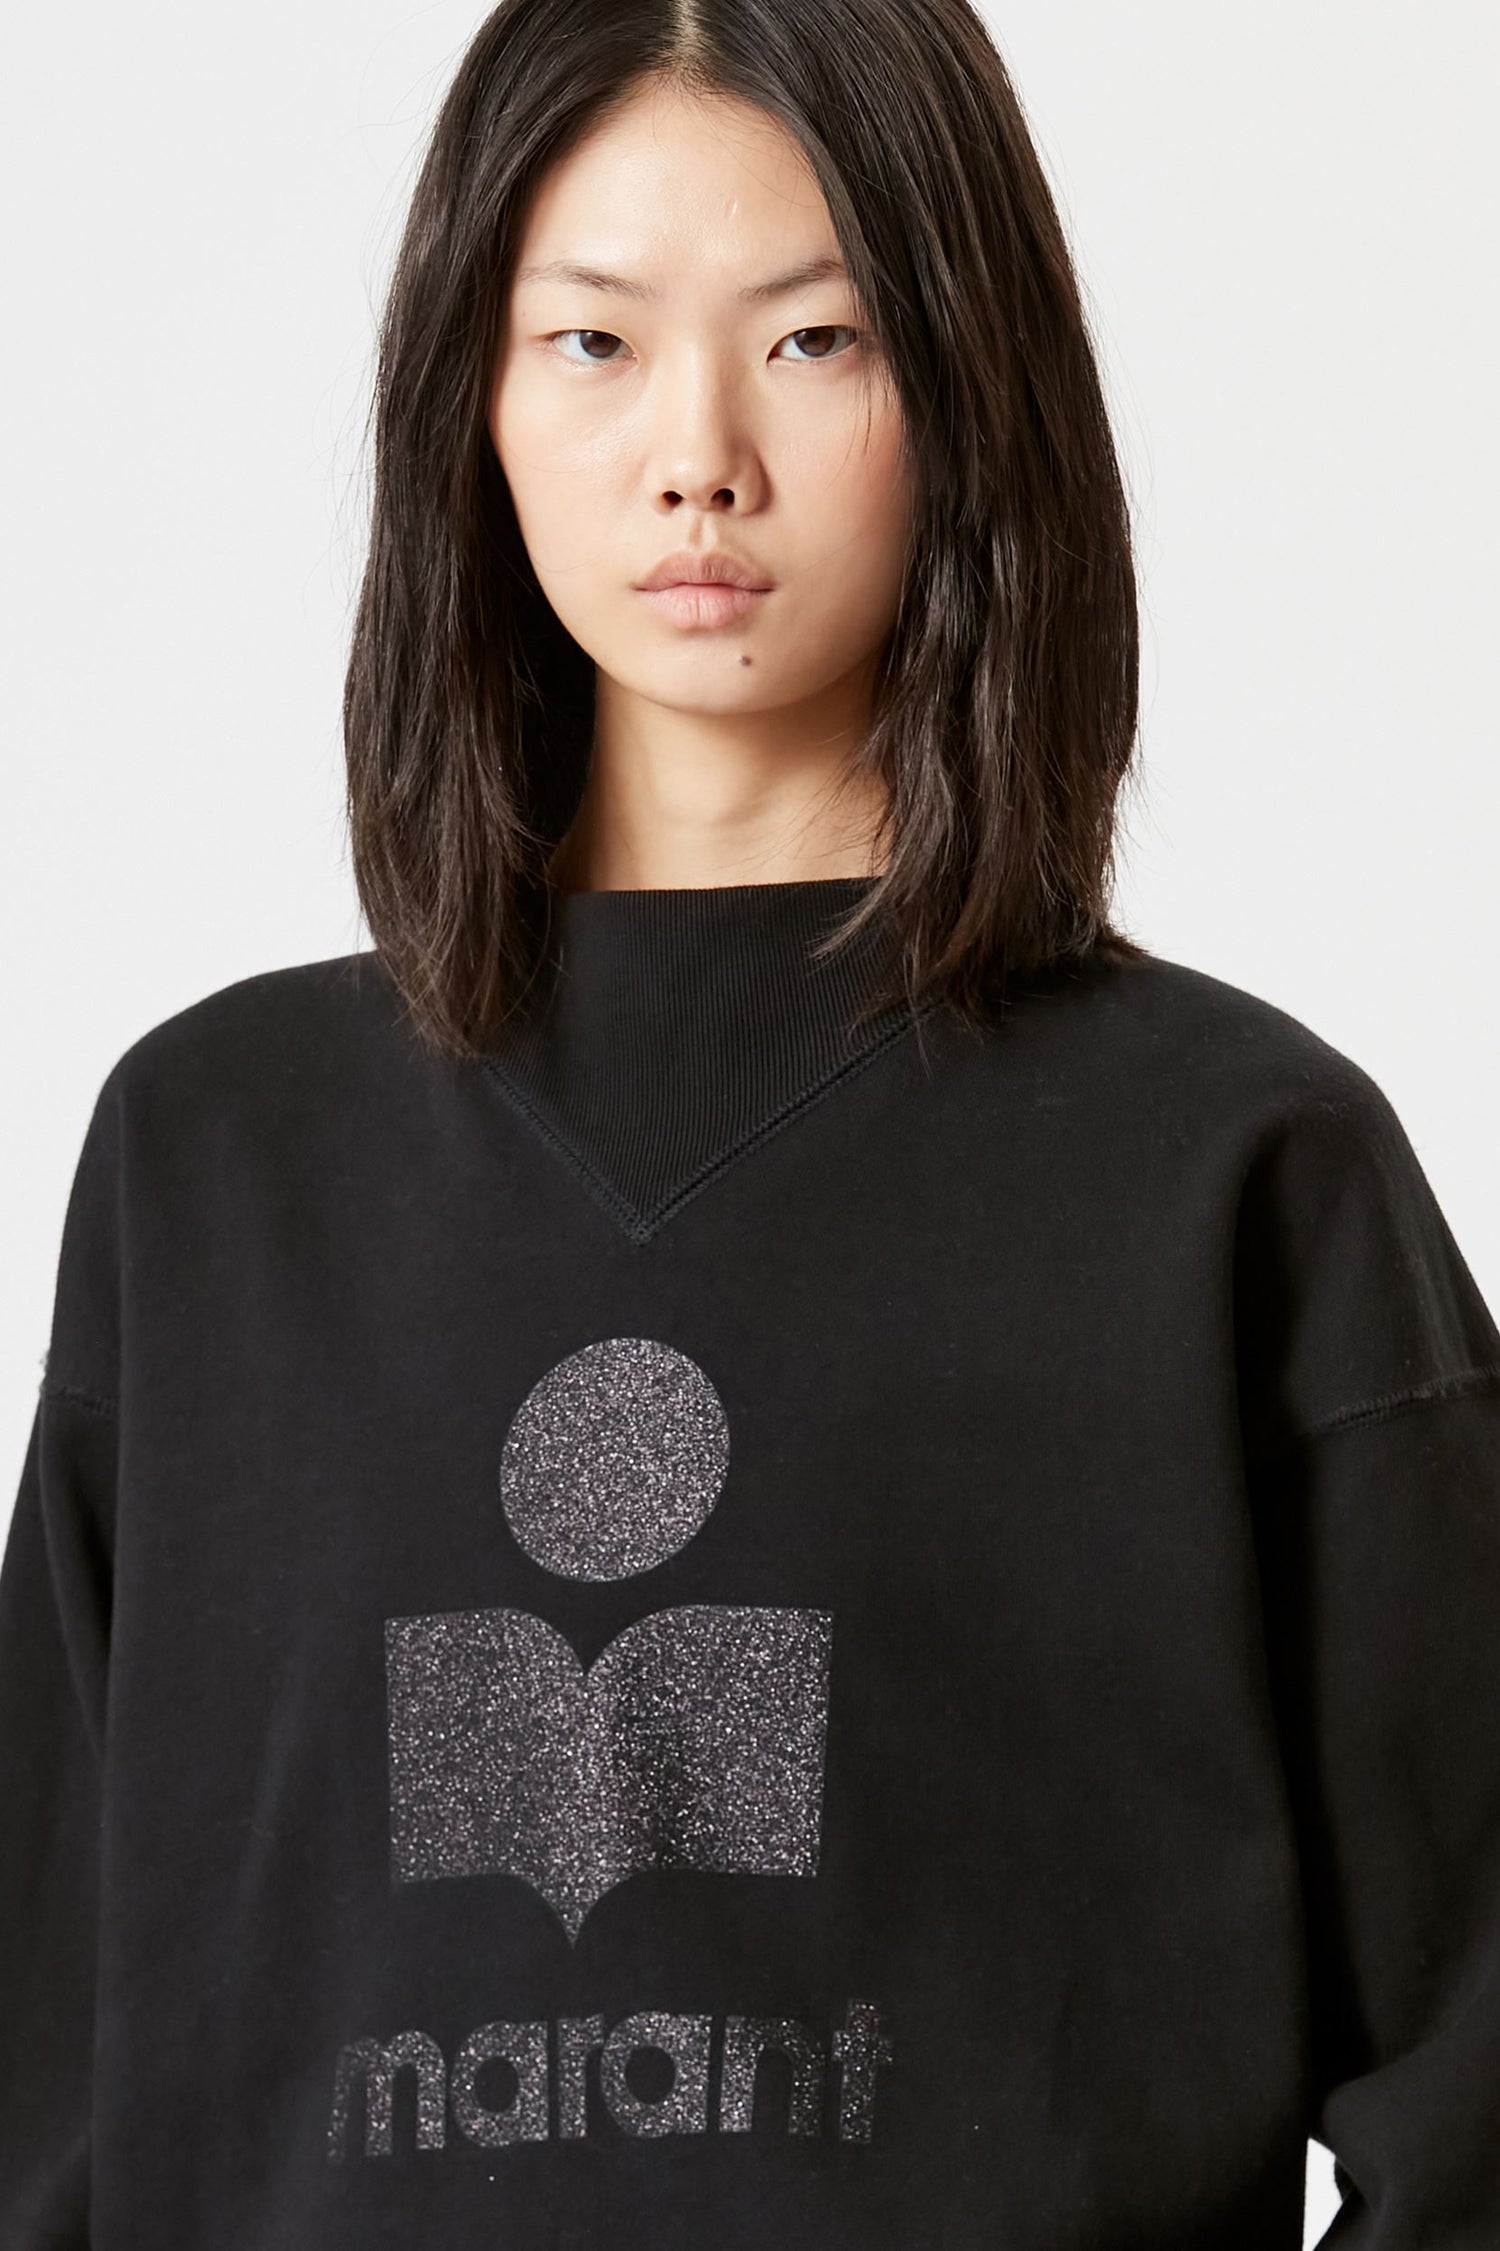 Moby glitter logo-print sweatshirt, black